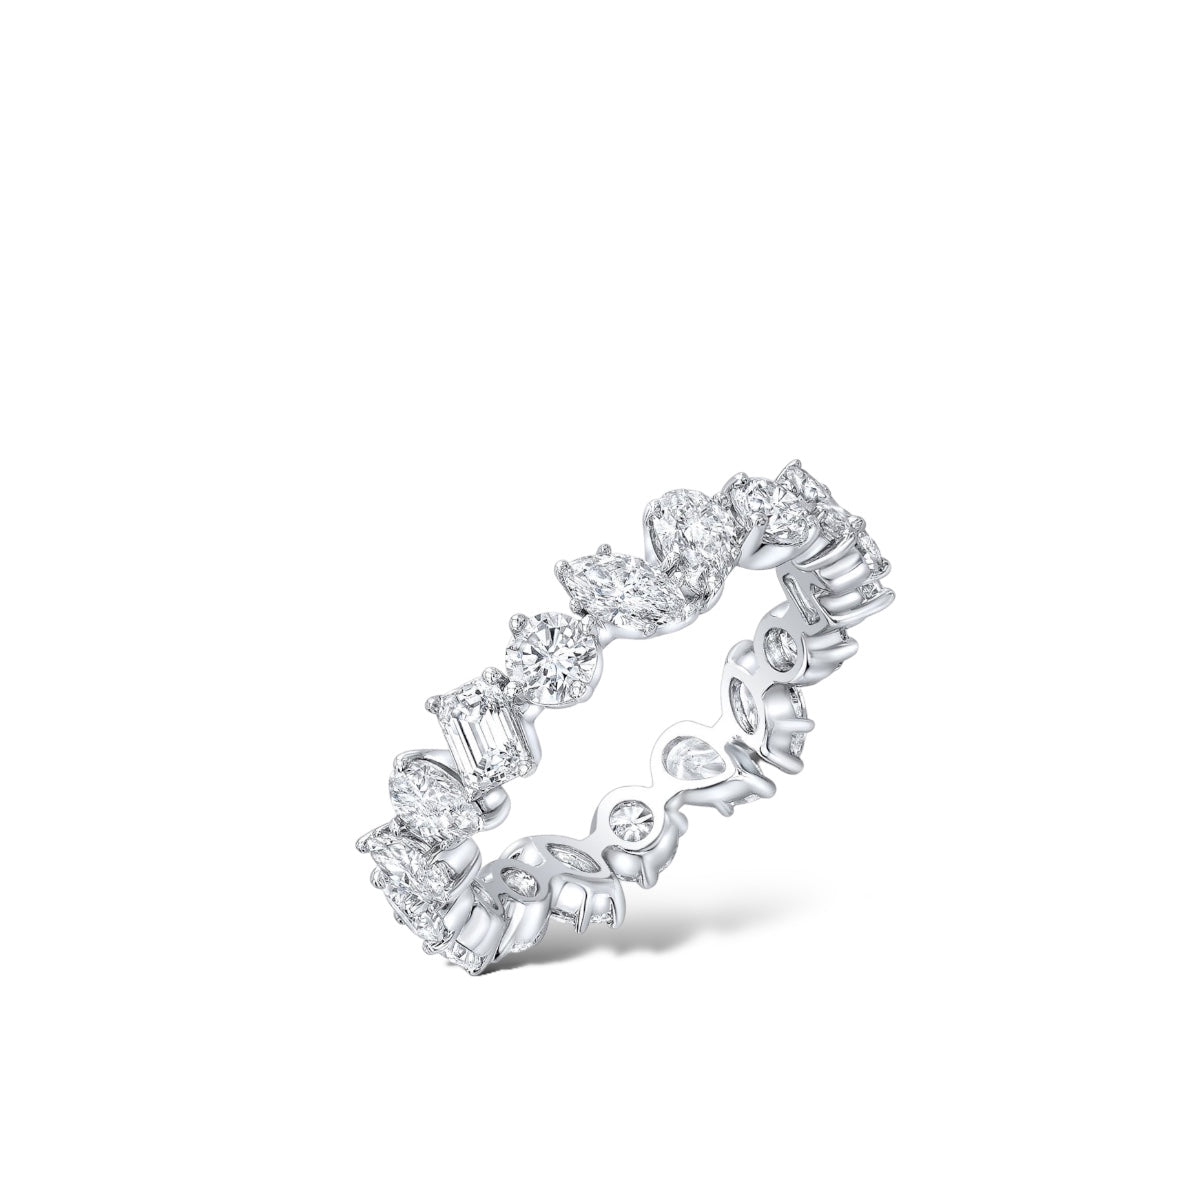 Mixed shape diamond eternity ring, fancy diamond cut wedding ring by Valentina Fine Jewellery USA Hong Kong